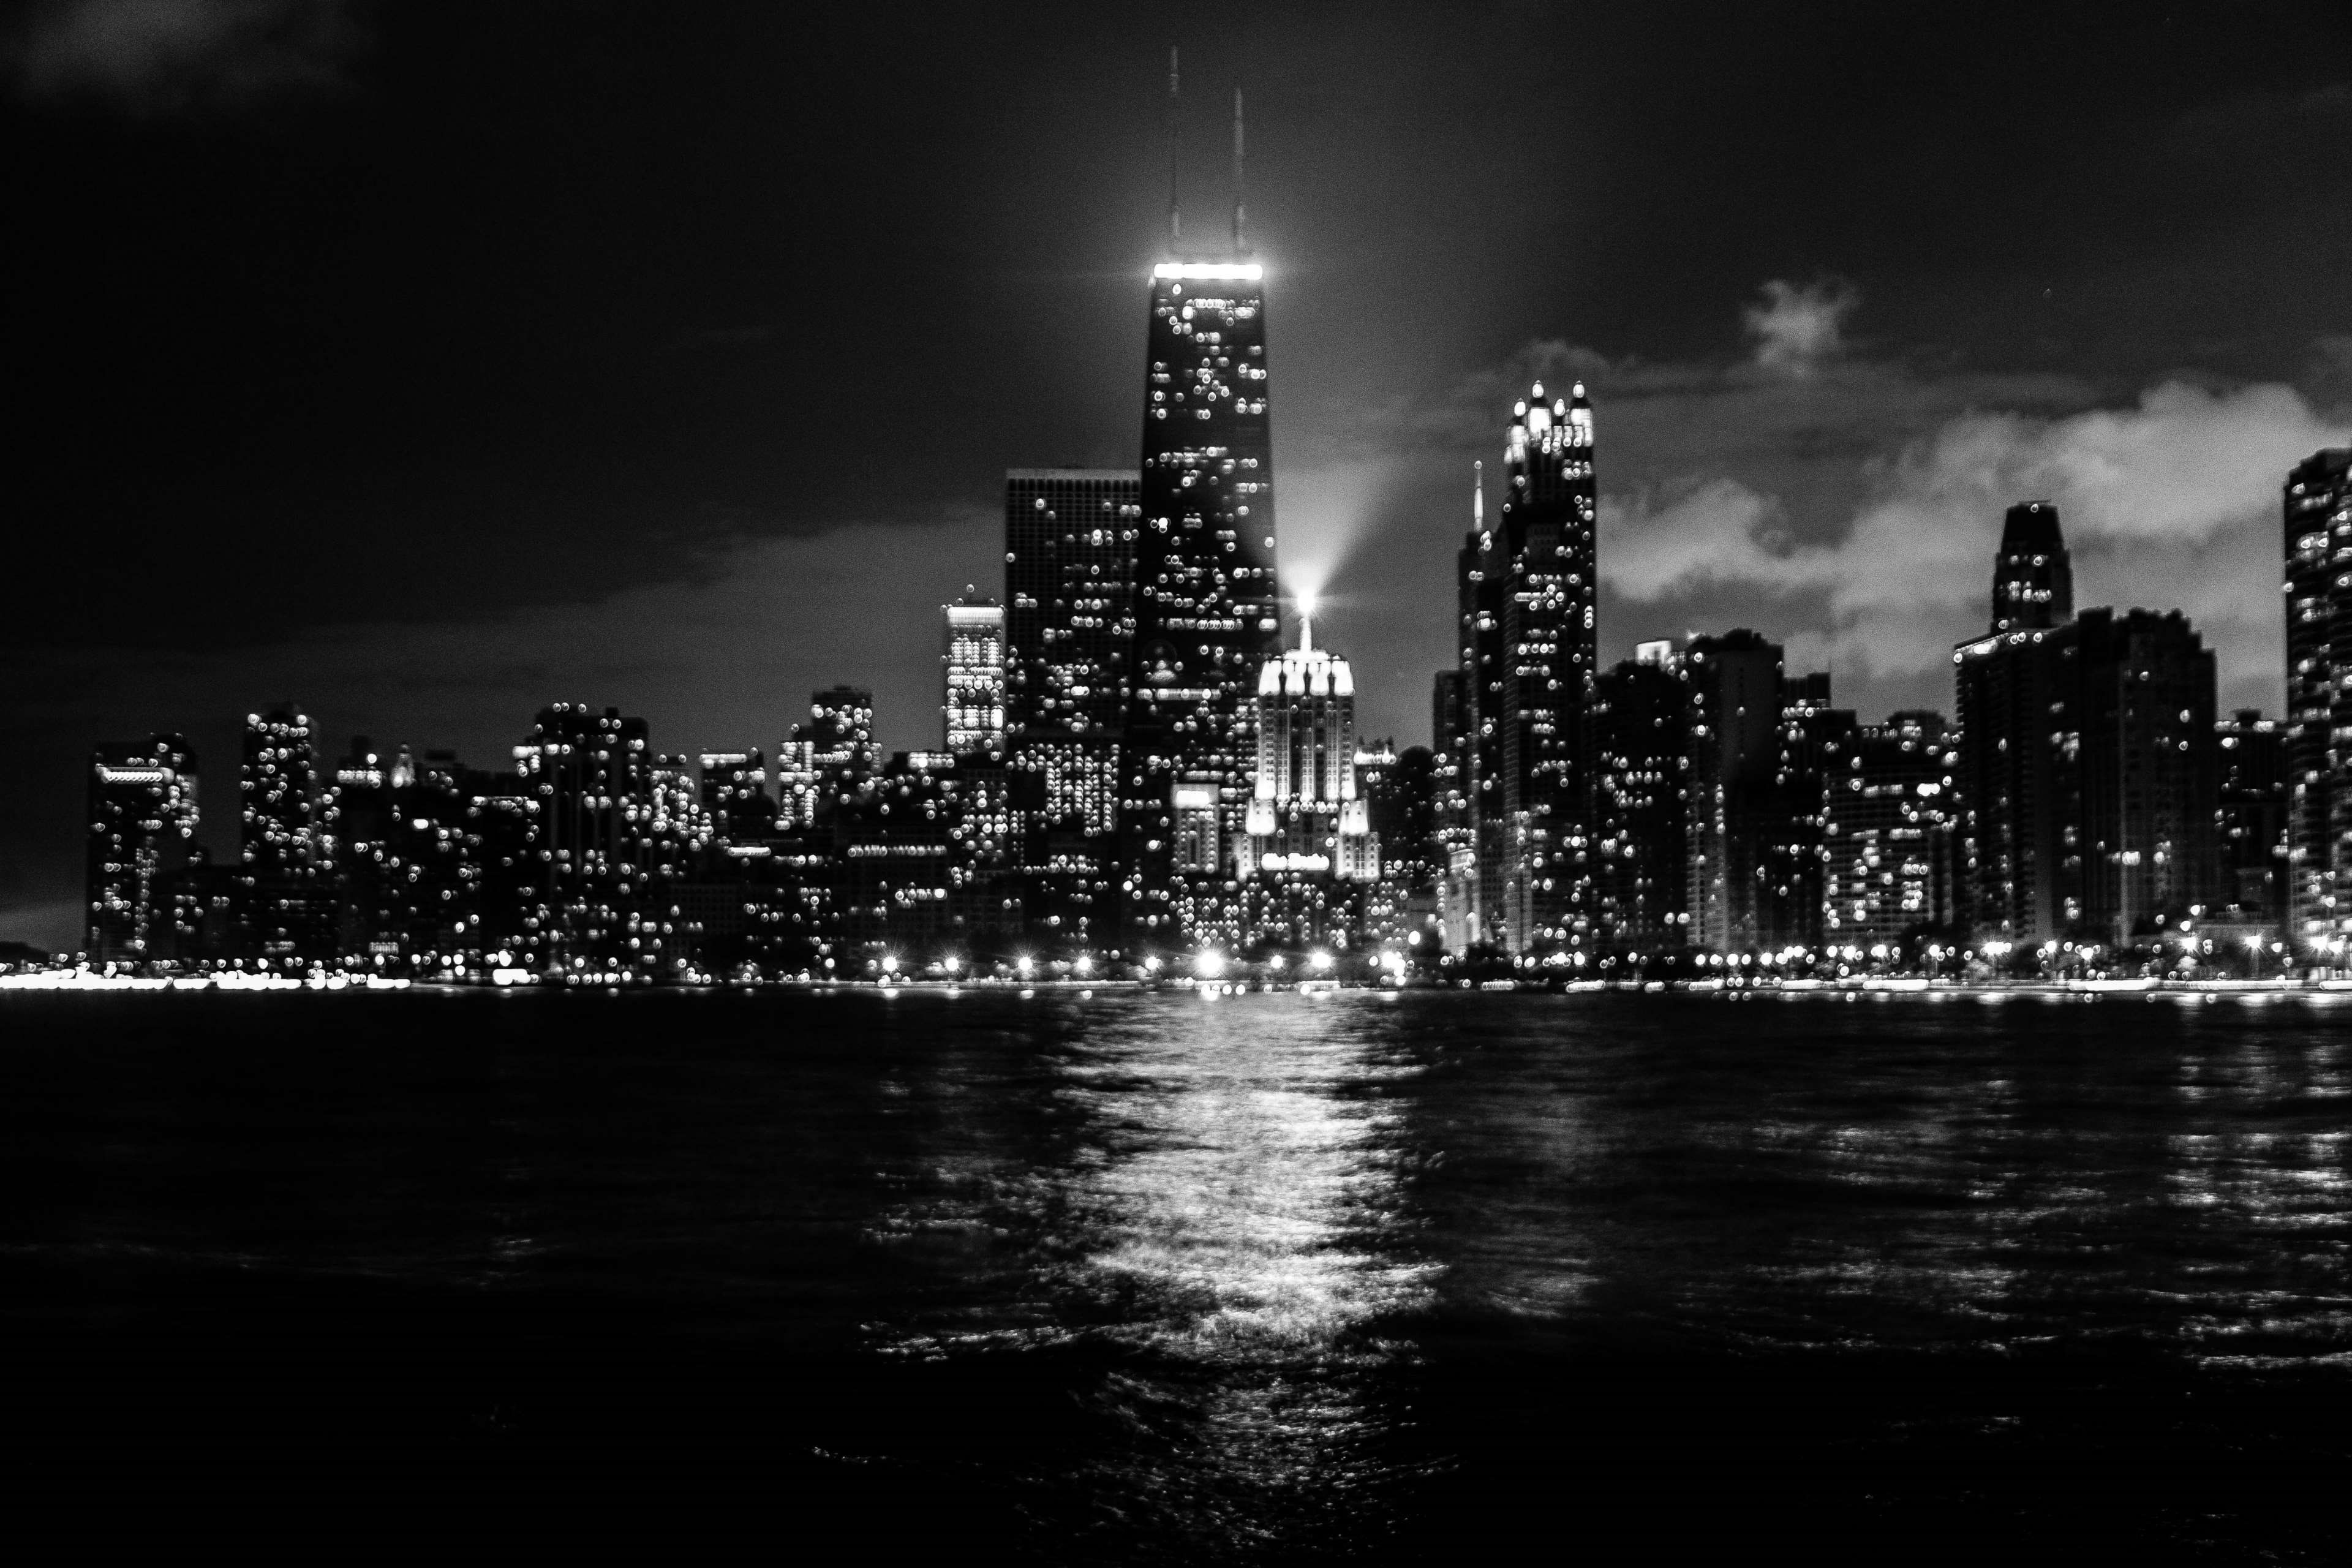 black and white #chicago #city city lights lake michigan #nighttime K # wallpaper #hdwallpaper #desktop. City lights, Chicago cityscape, Lake michigan